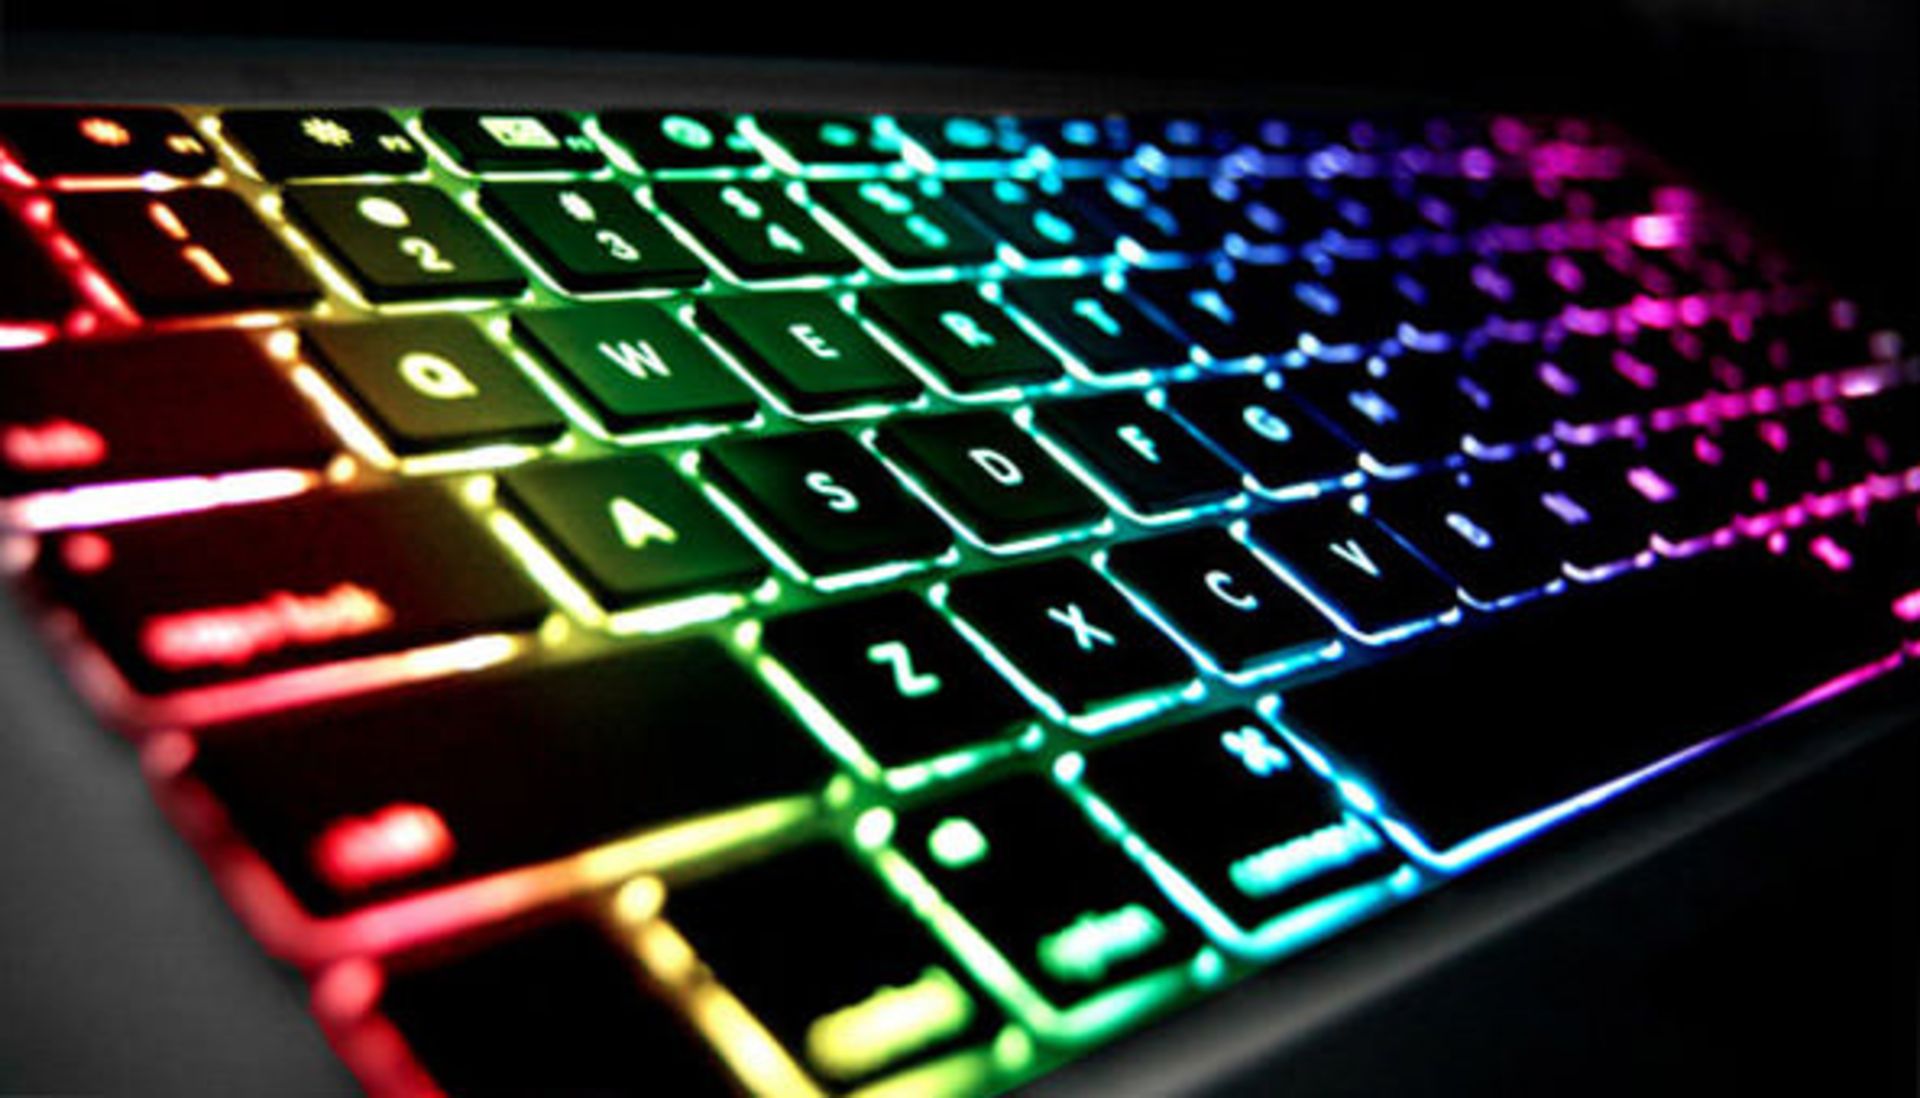 rainbow-colored-macbook-pro-keyboard-backlight